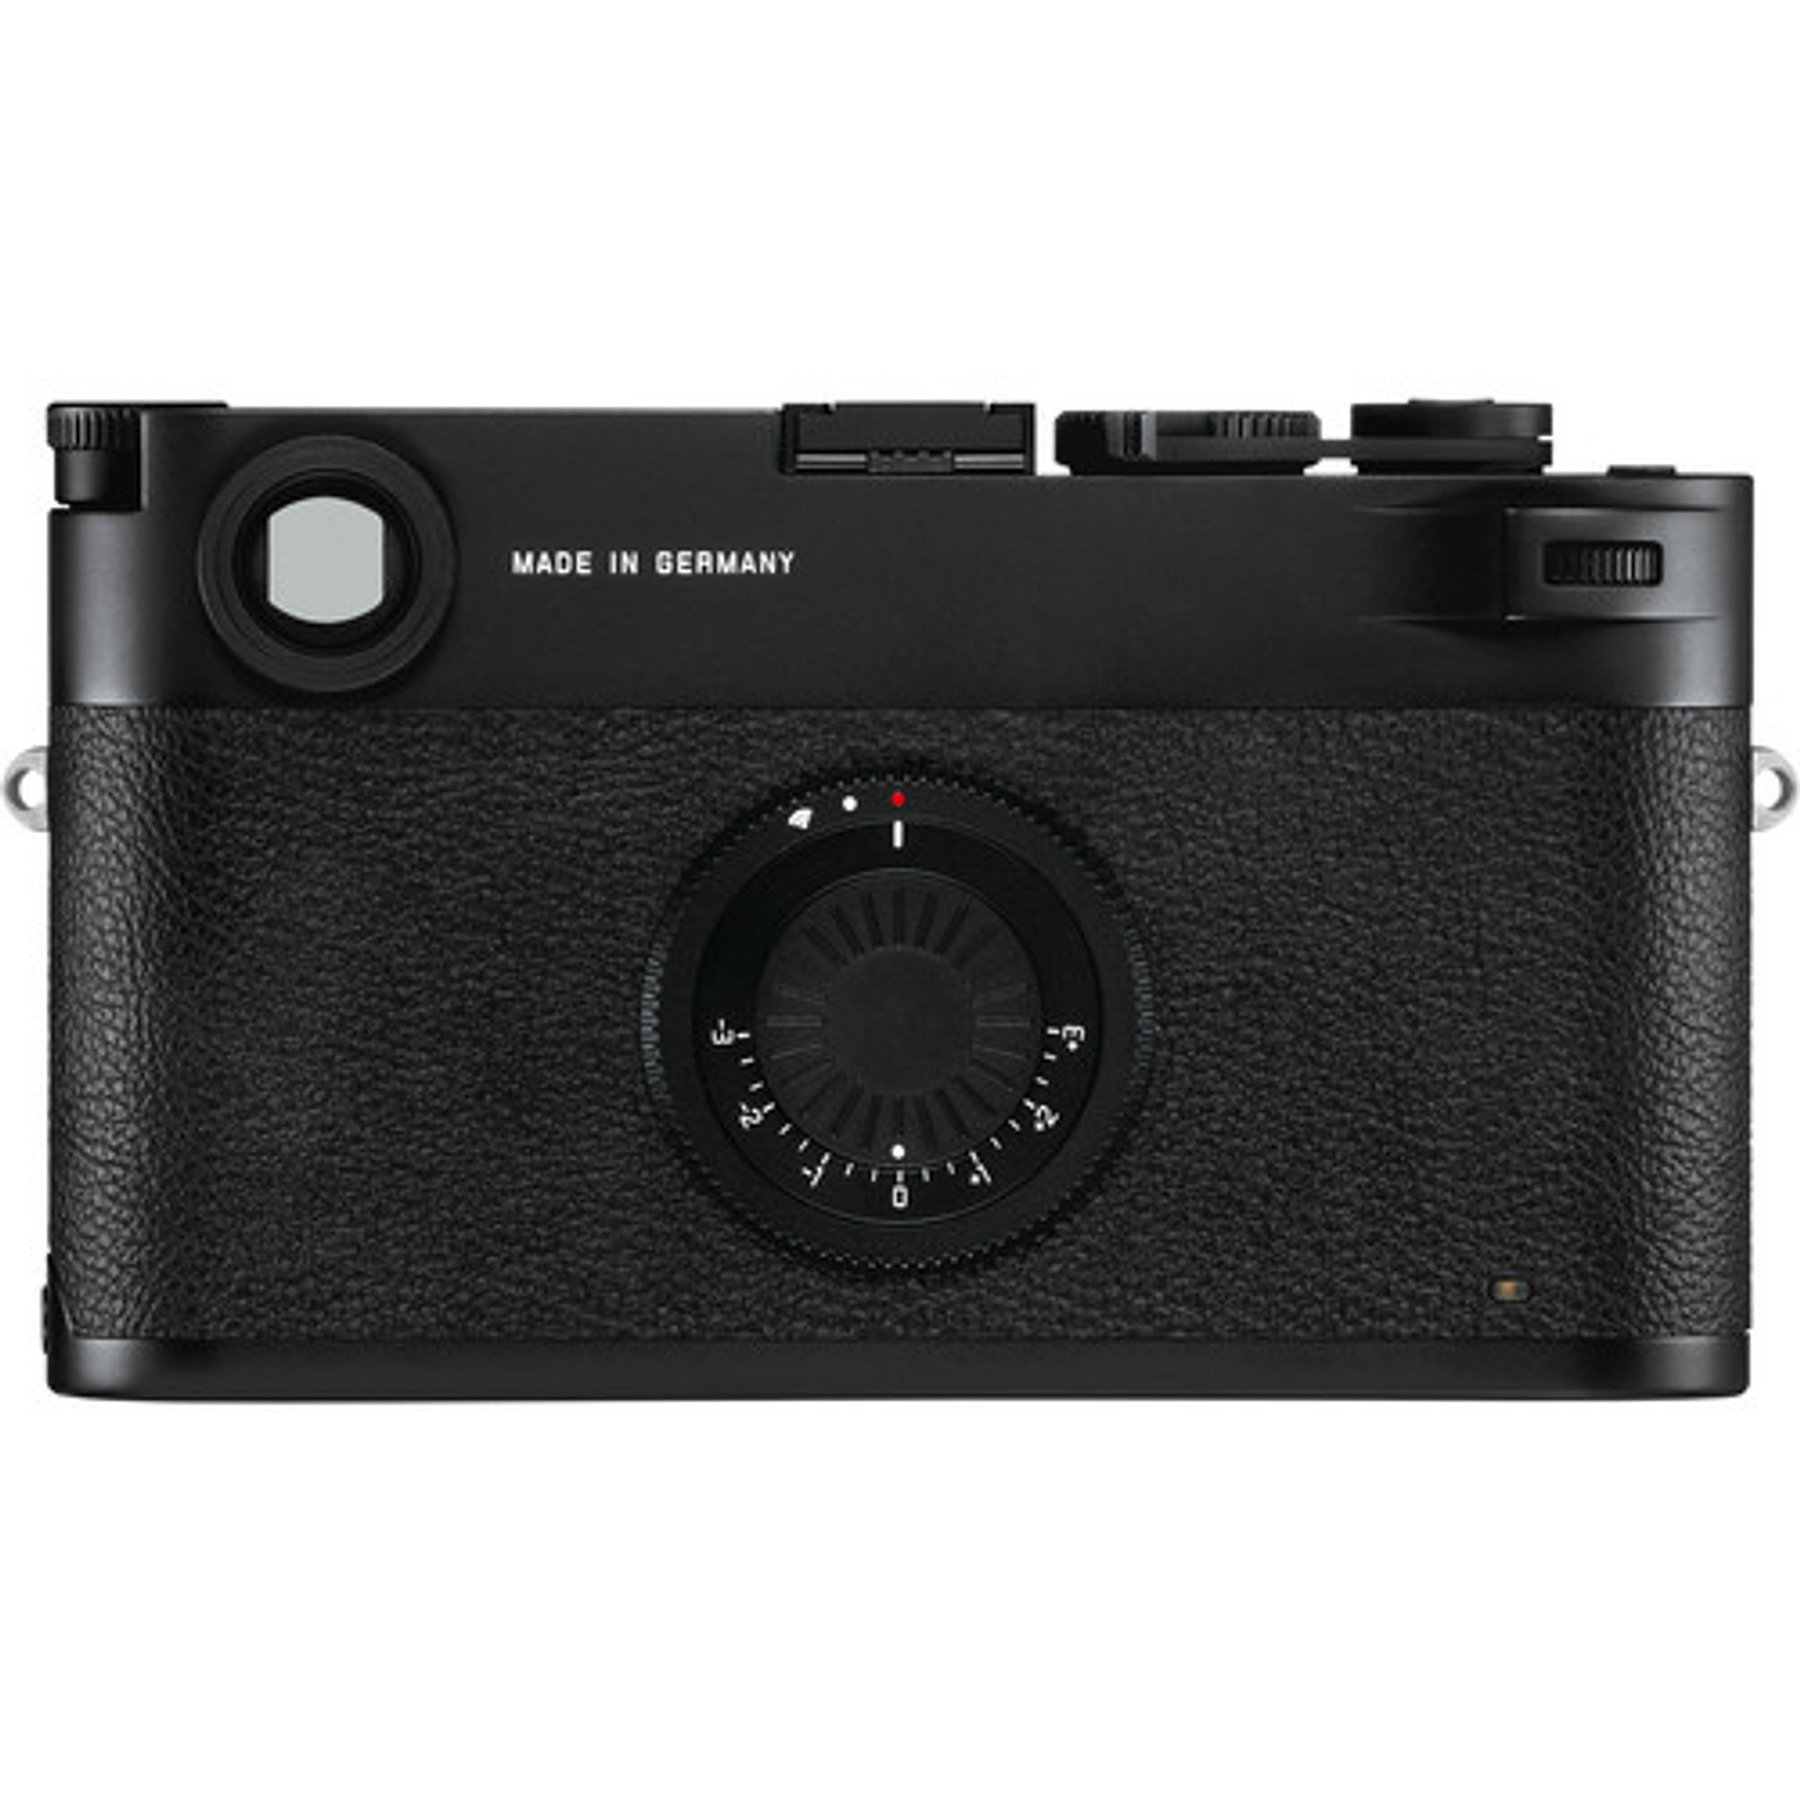 Leica M10-D Digital Rangefinder